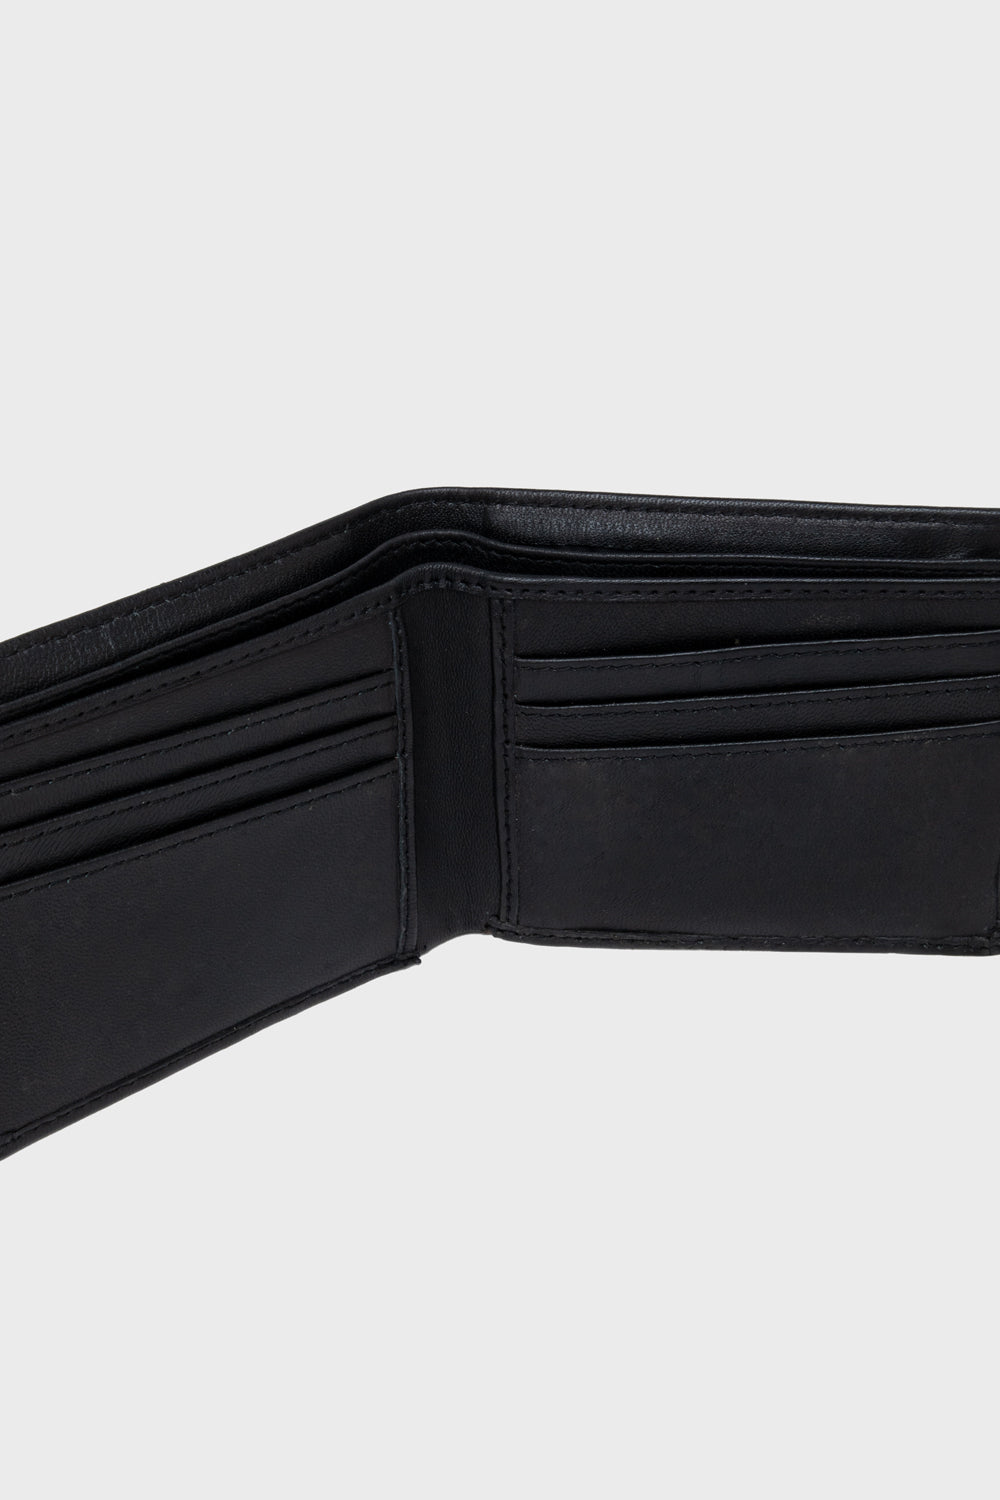 Justanned Black Genuine Leather Wallet